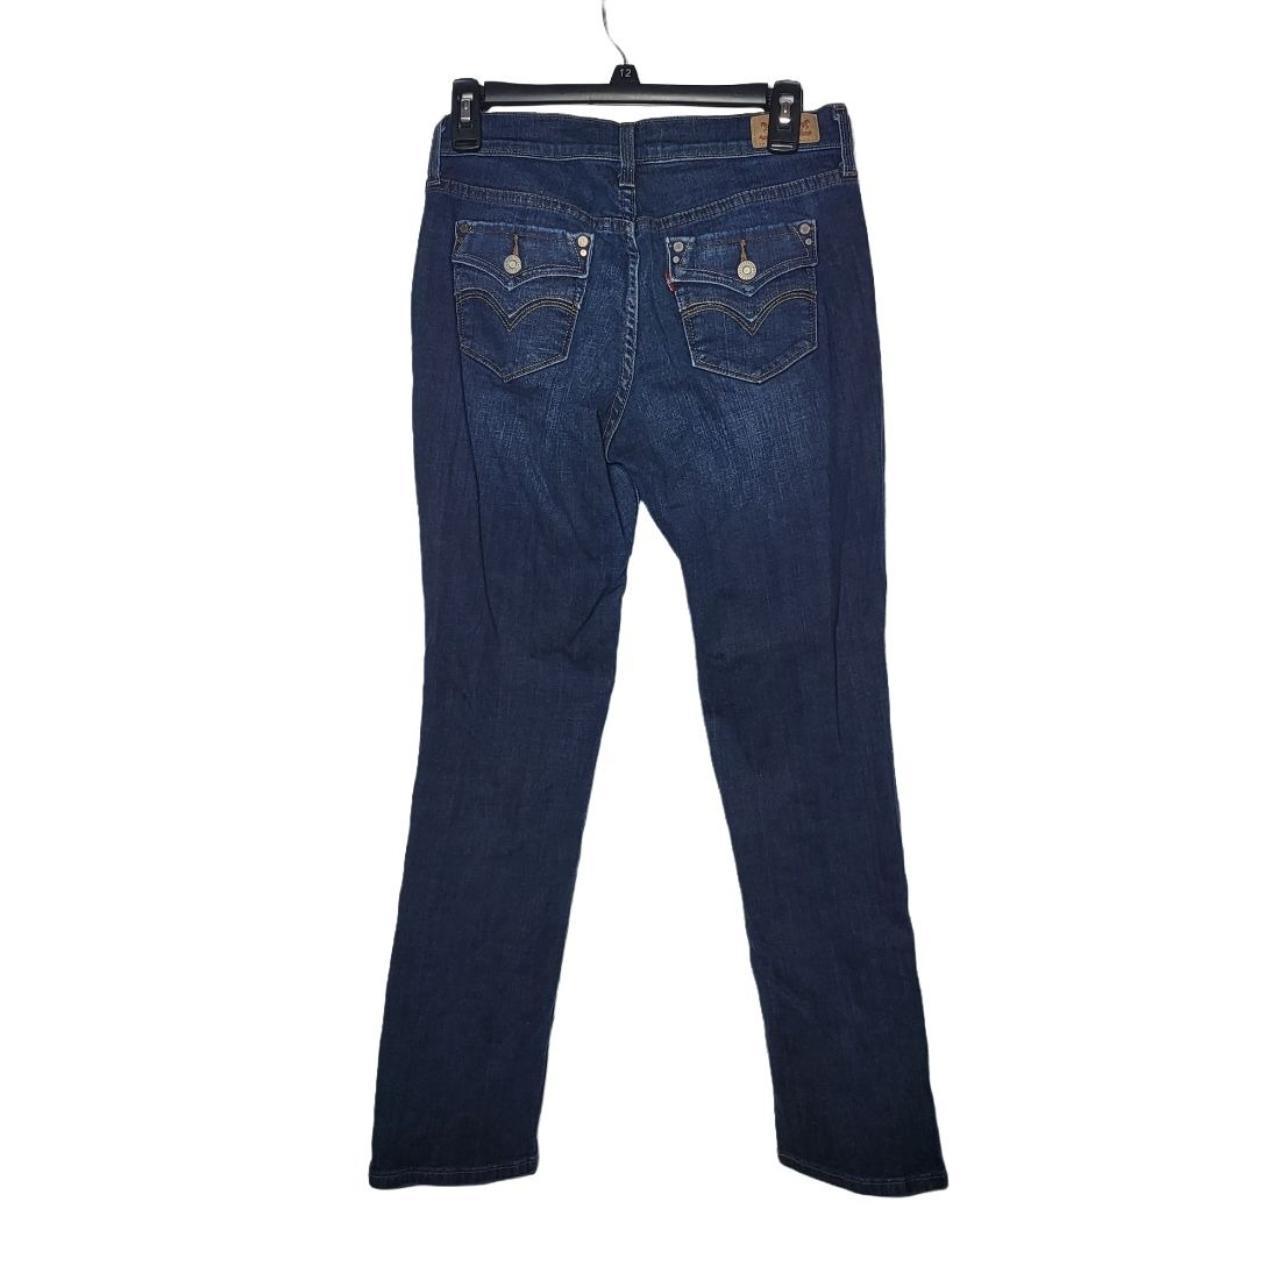 Levi's 505 Straight Leg Denim Blue Jeans Women's... - Depop